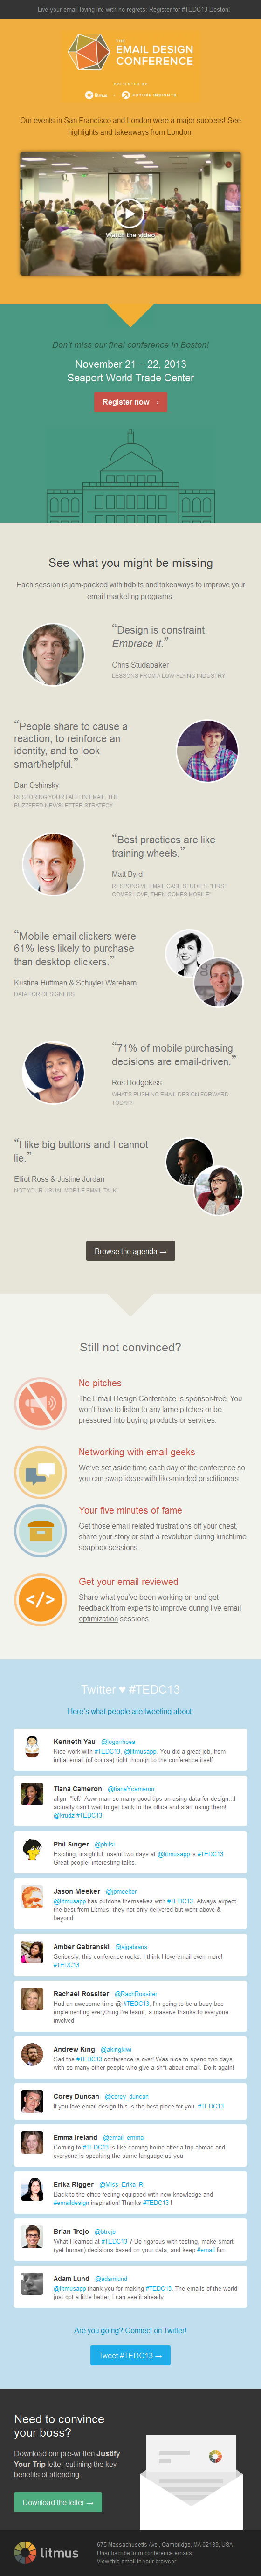 Litmus email design conference